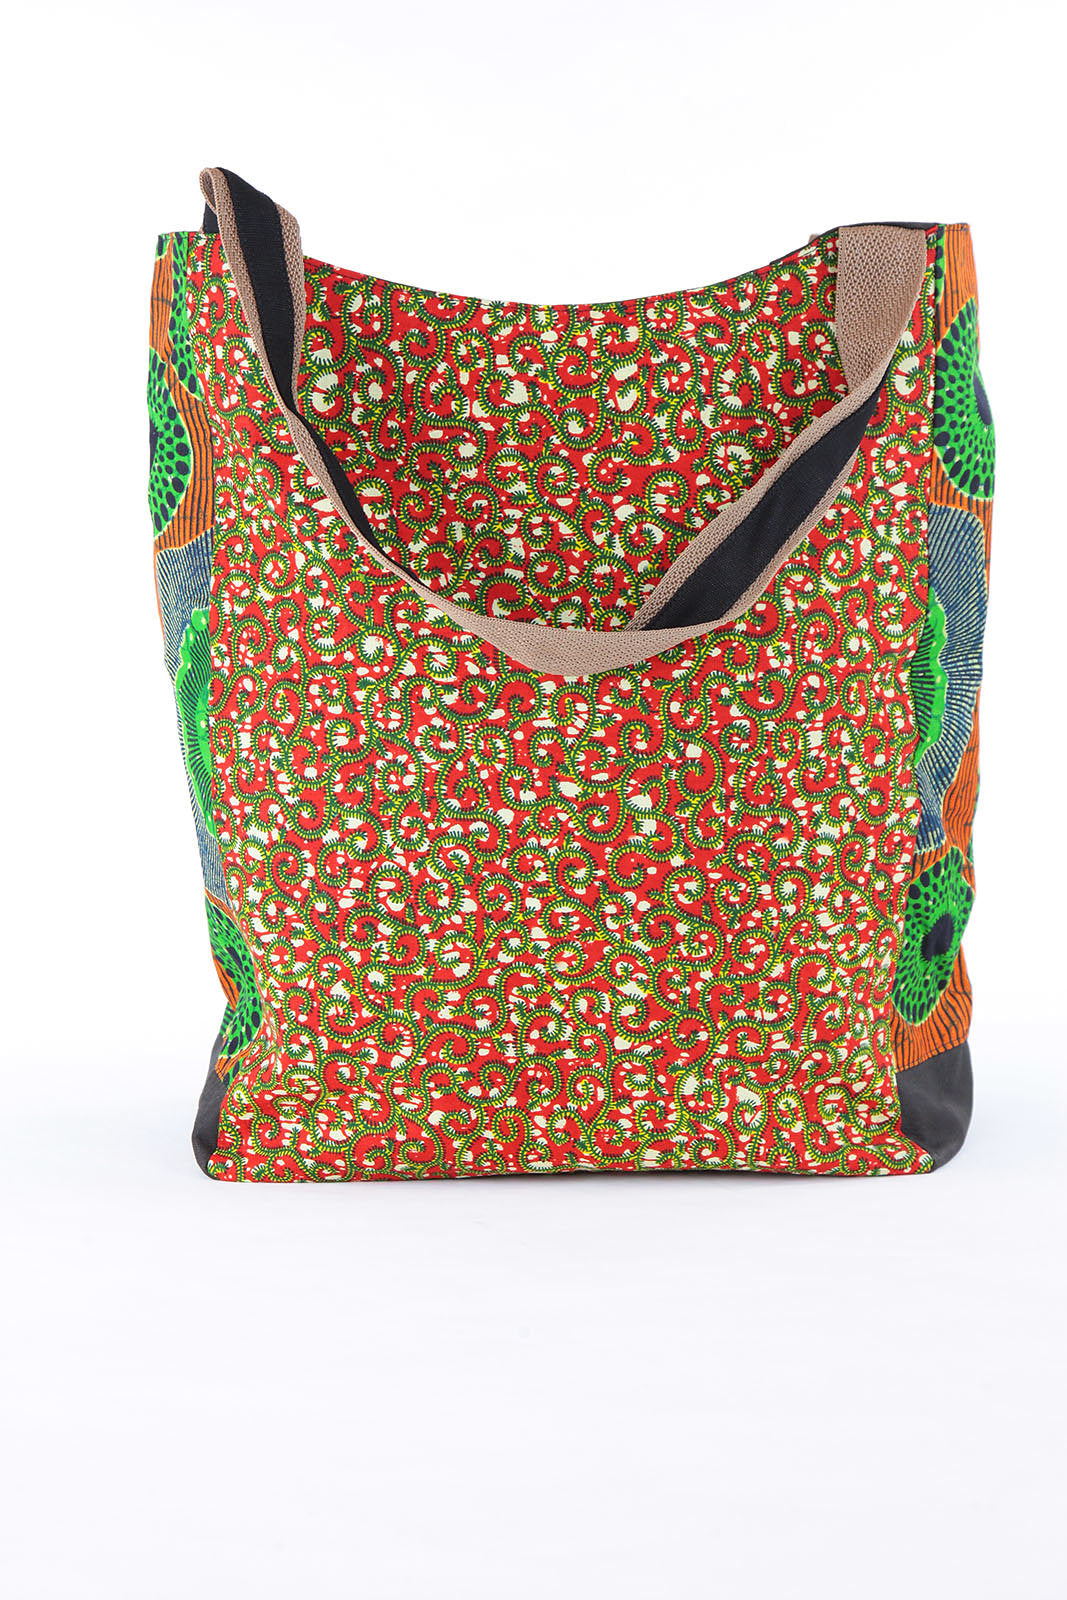 African Print Shopper Bag- Red/Green Floral - Africas Closet